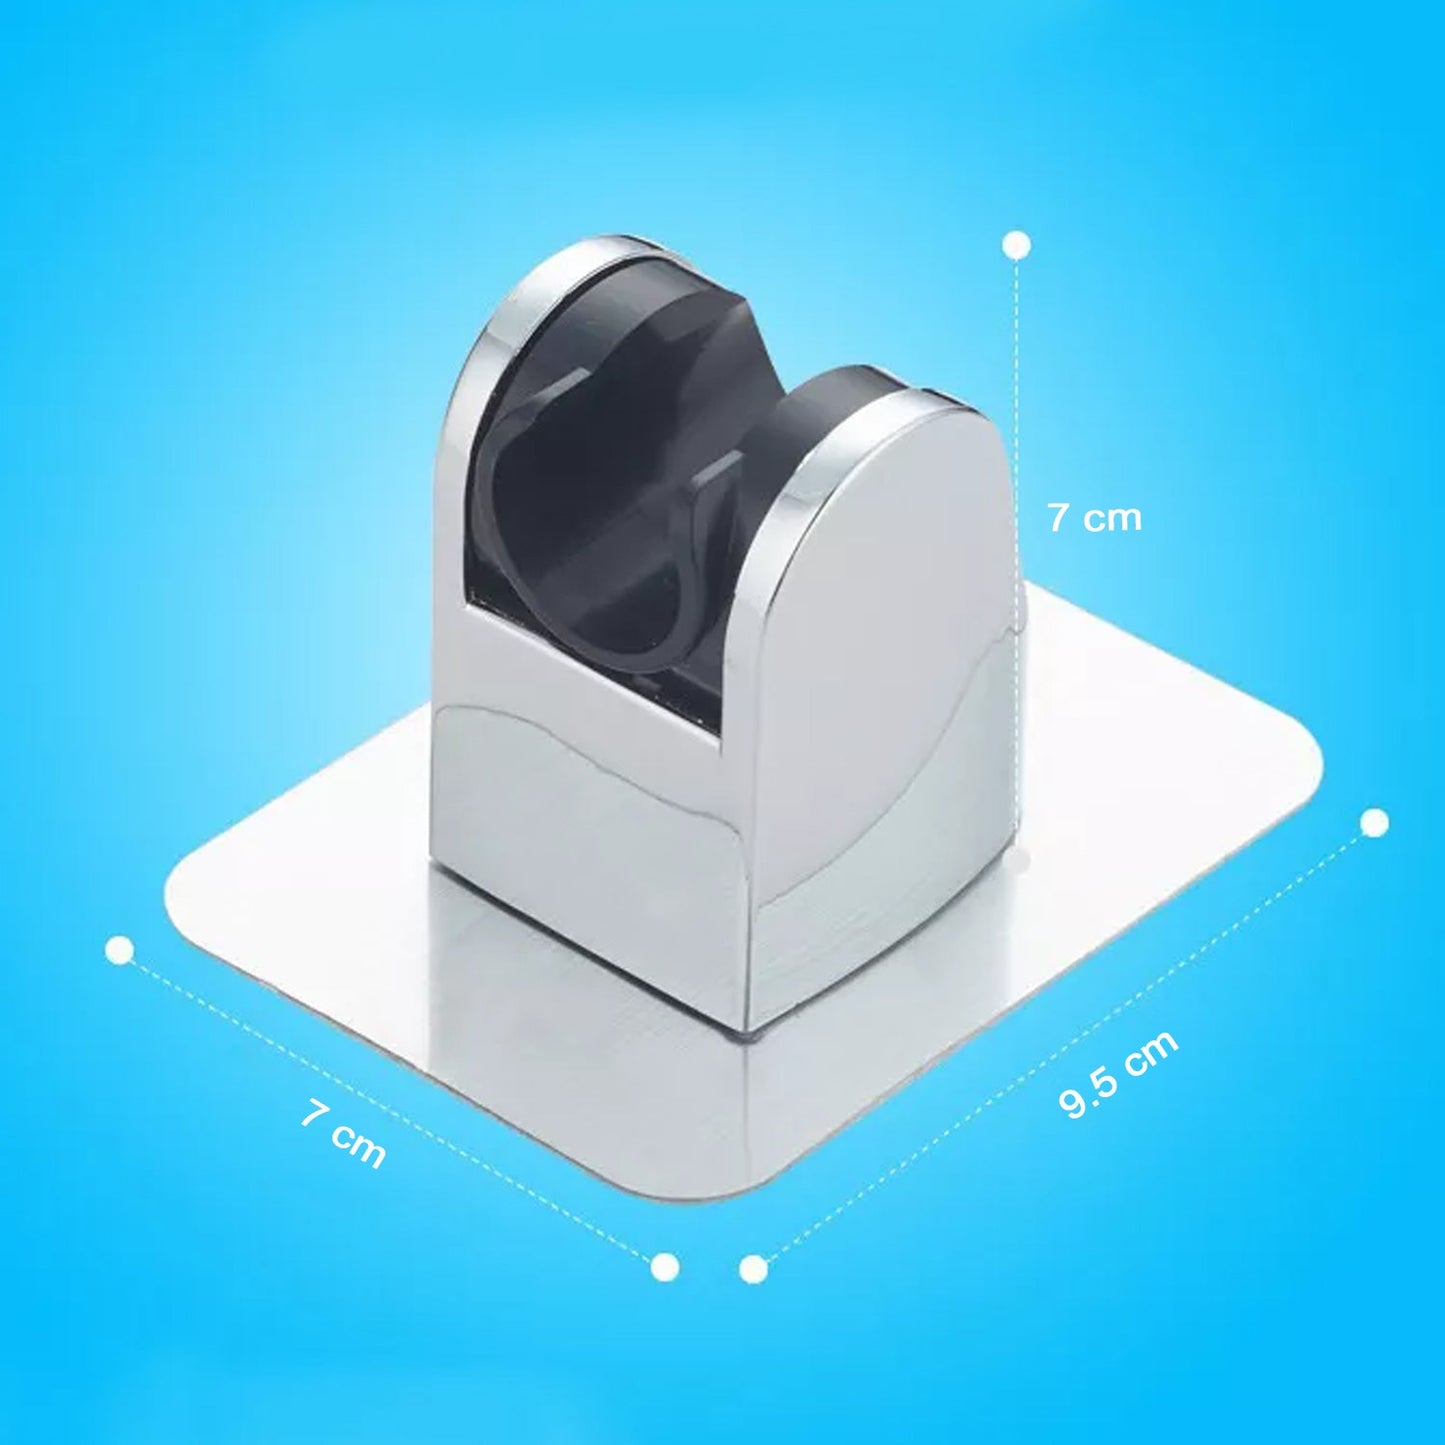 6255 Shower Head Holder, Adhesive Handheld Shower Holder, with adhesive sticker to hold. DeoDap